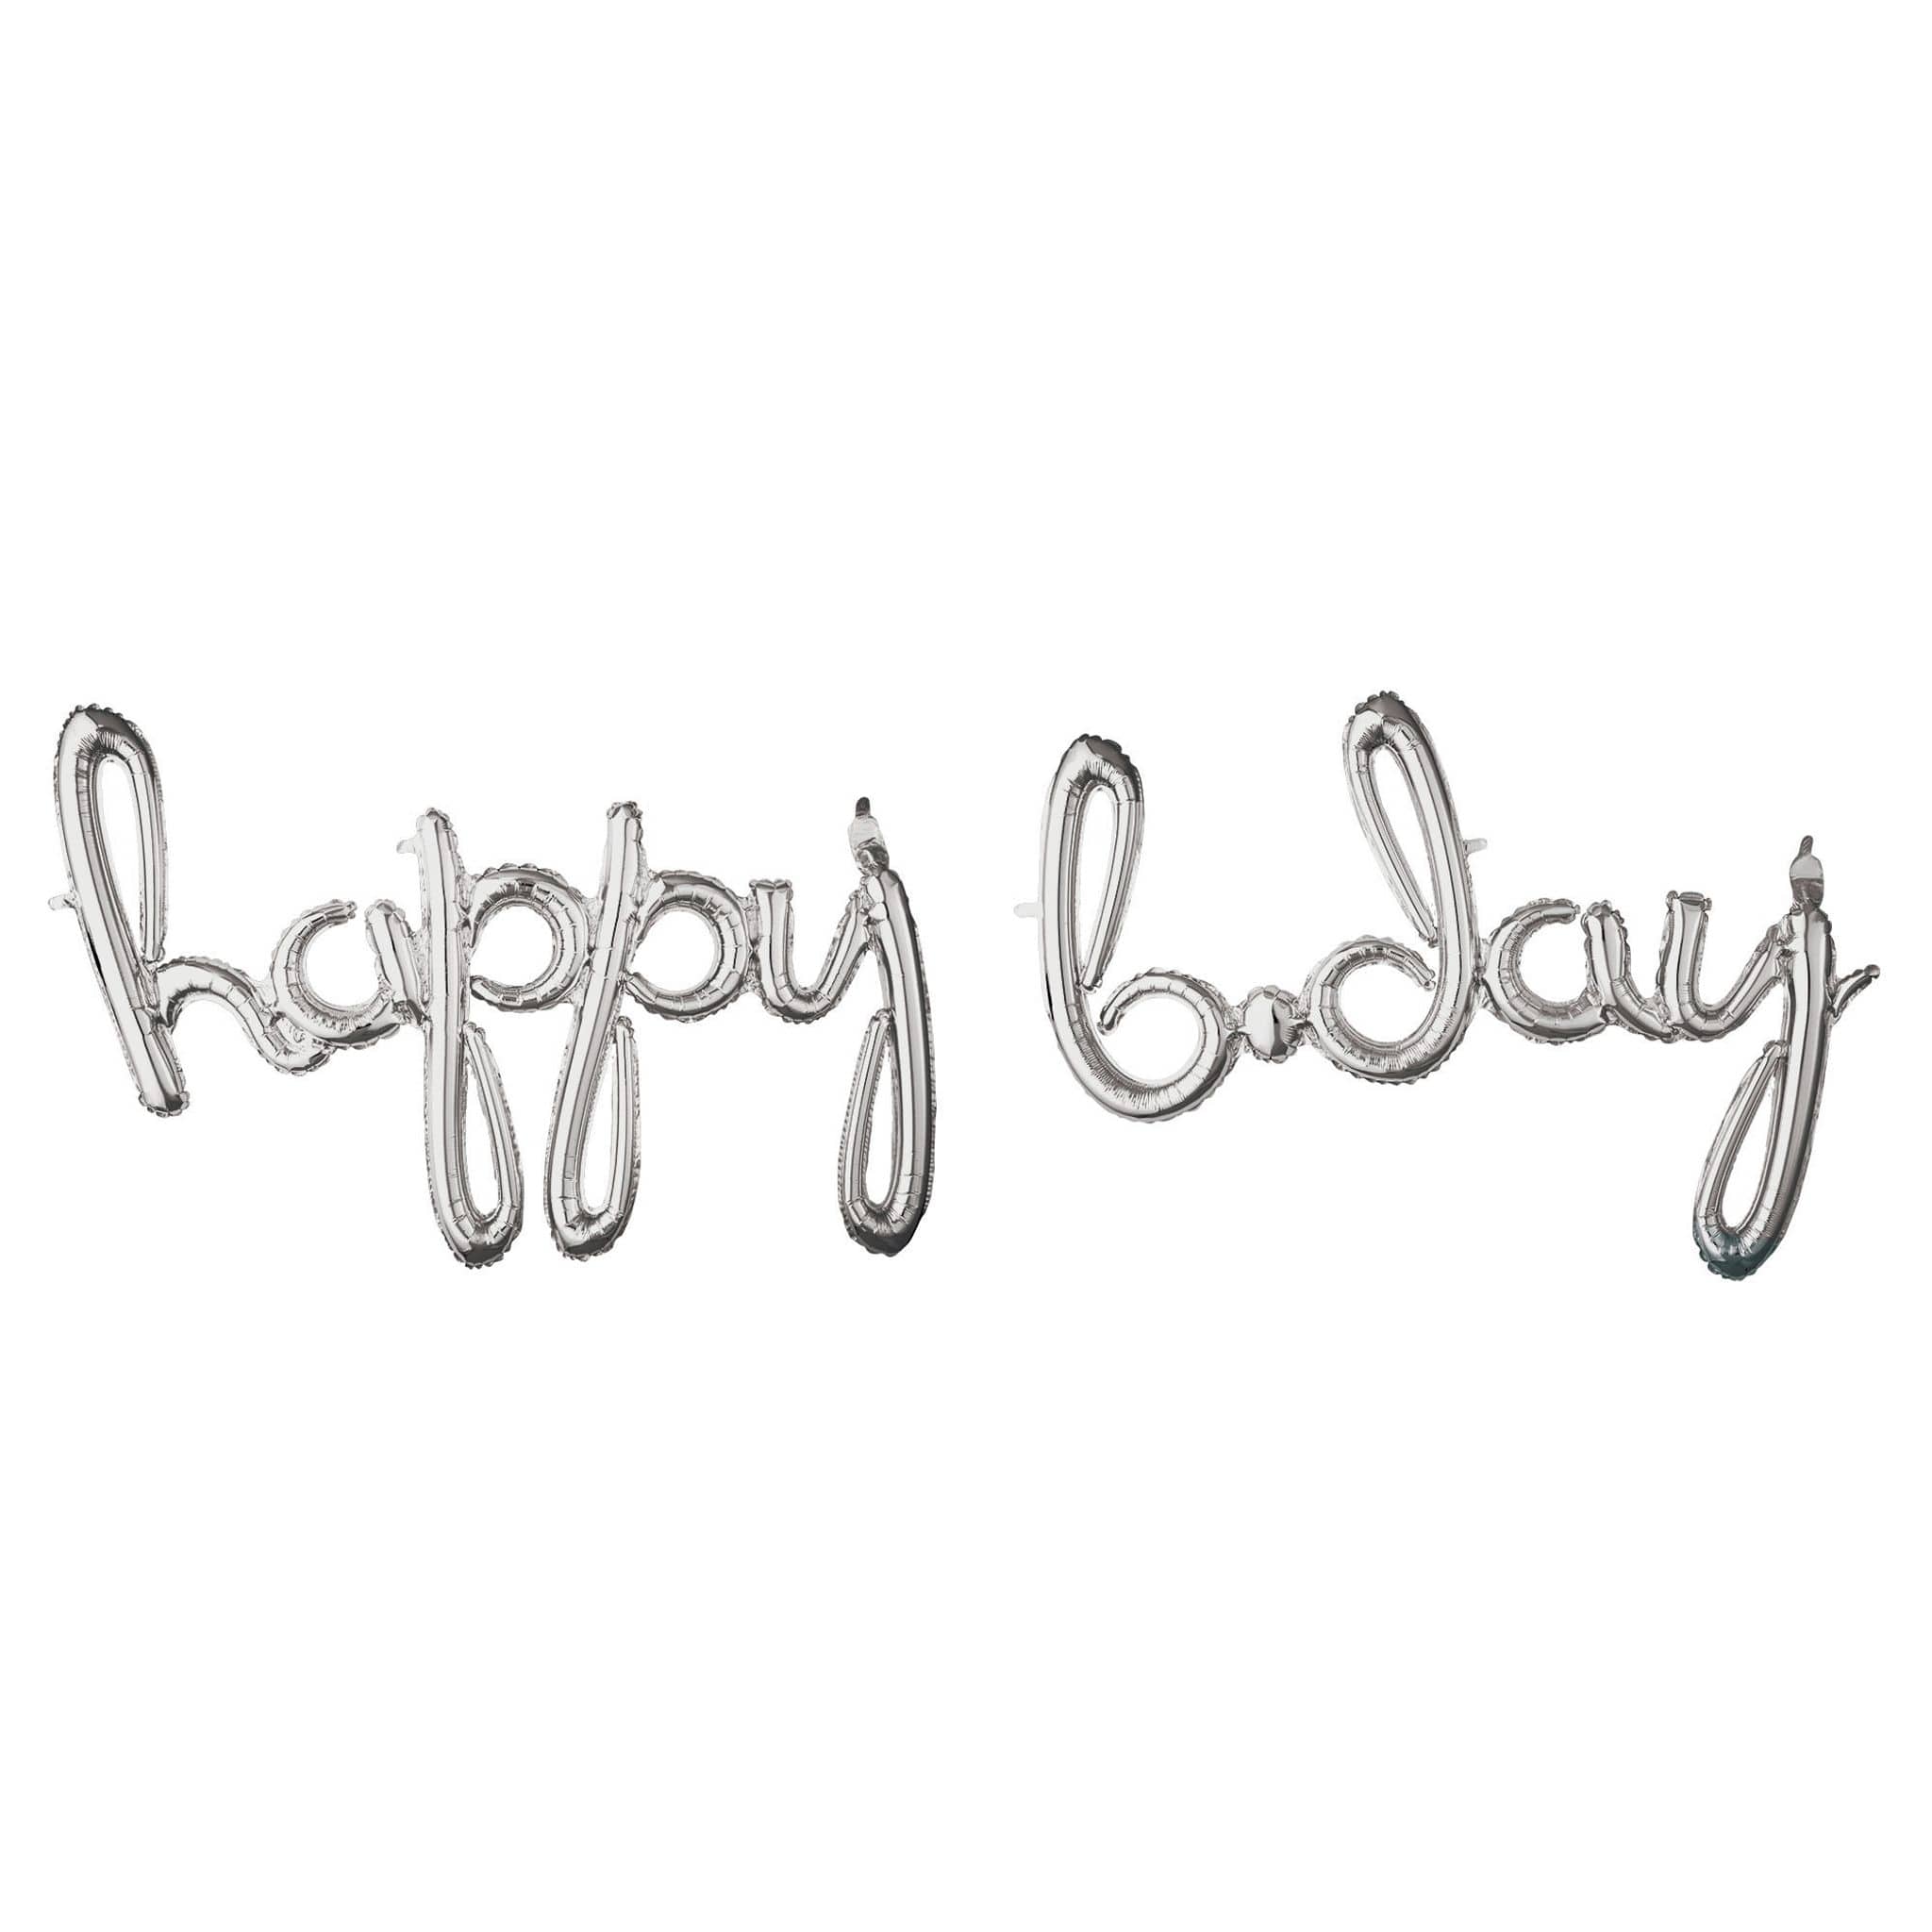 Cursive Happy B-Day Letter Balloon Banner